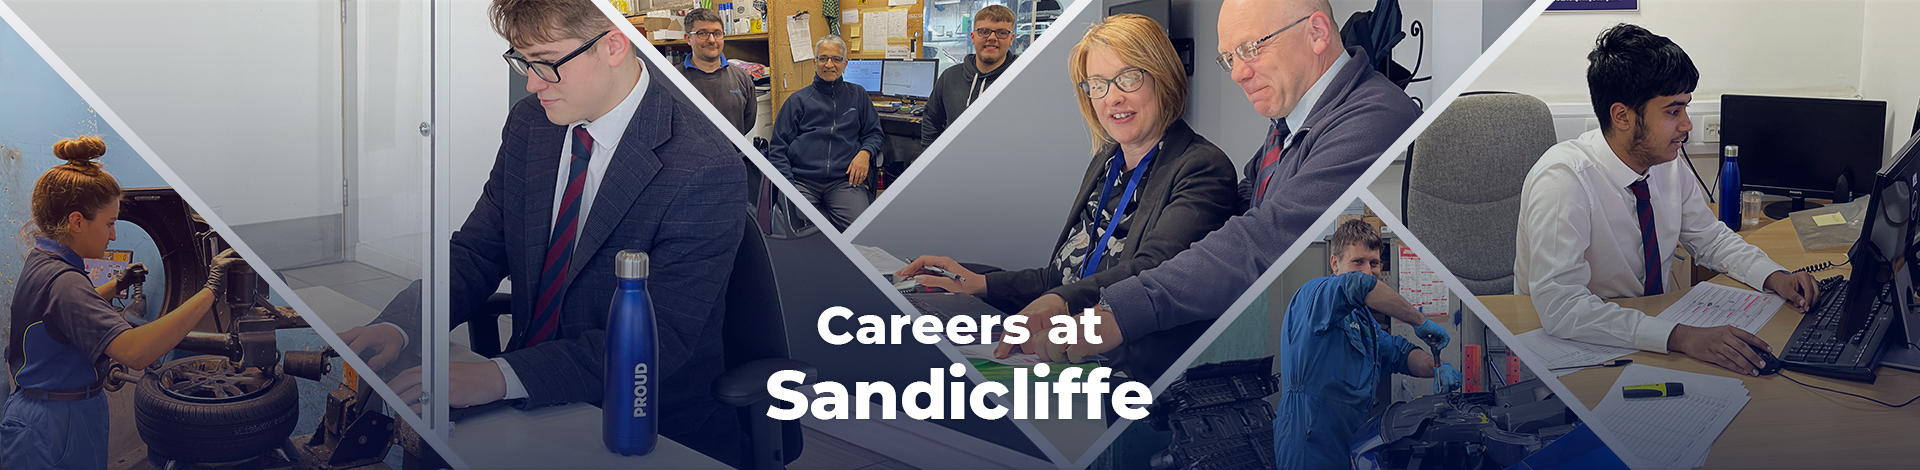 Careers at Sandicliffe on /